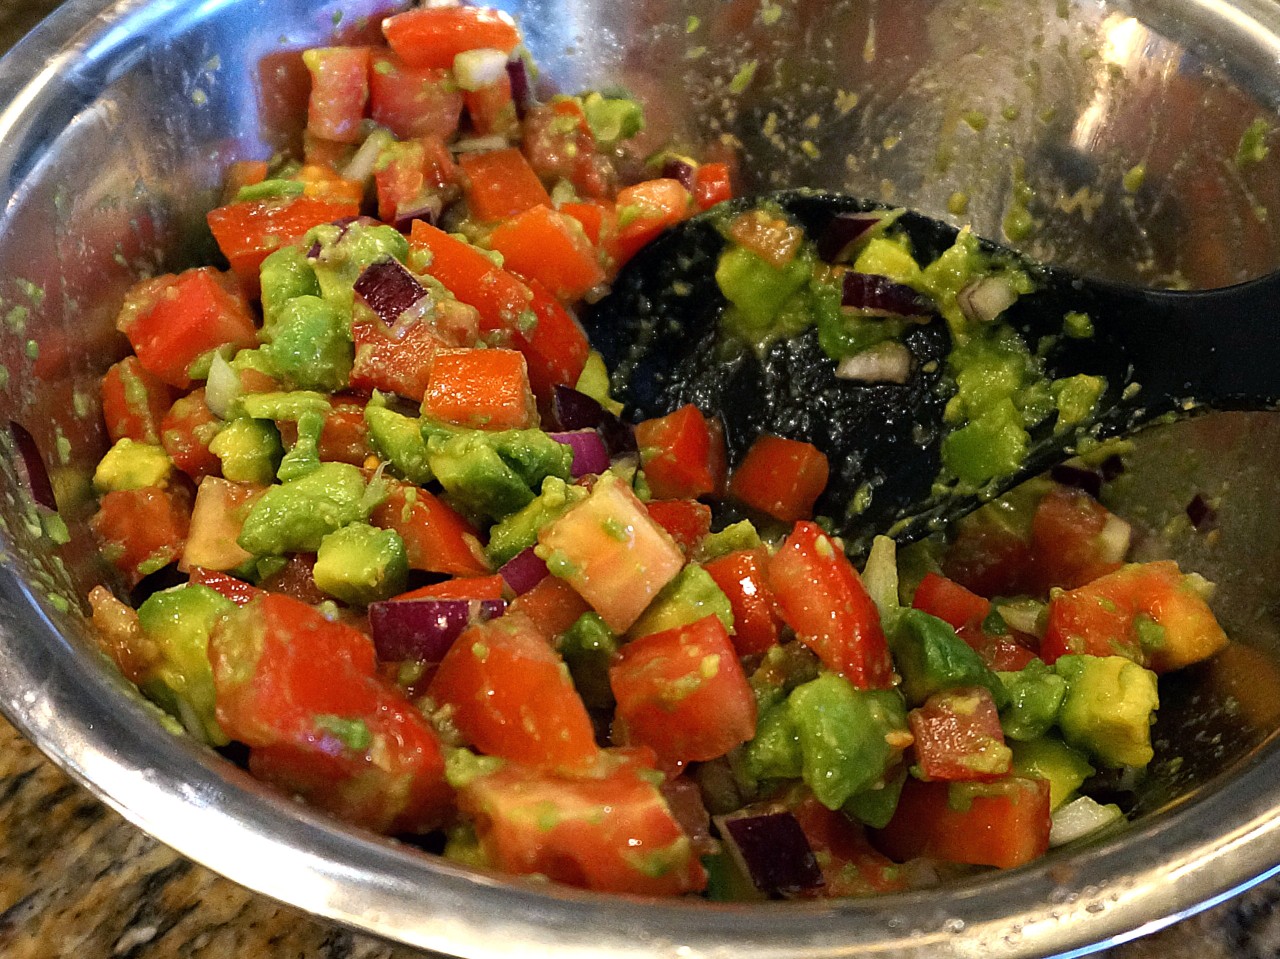 Fresh guacamole - I'm a homemade guacamole convert!!